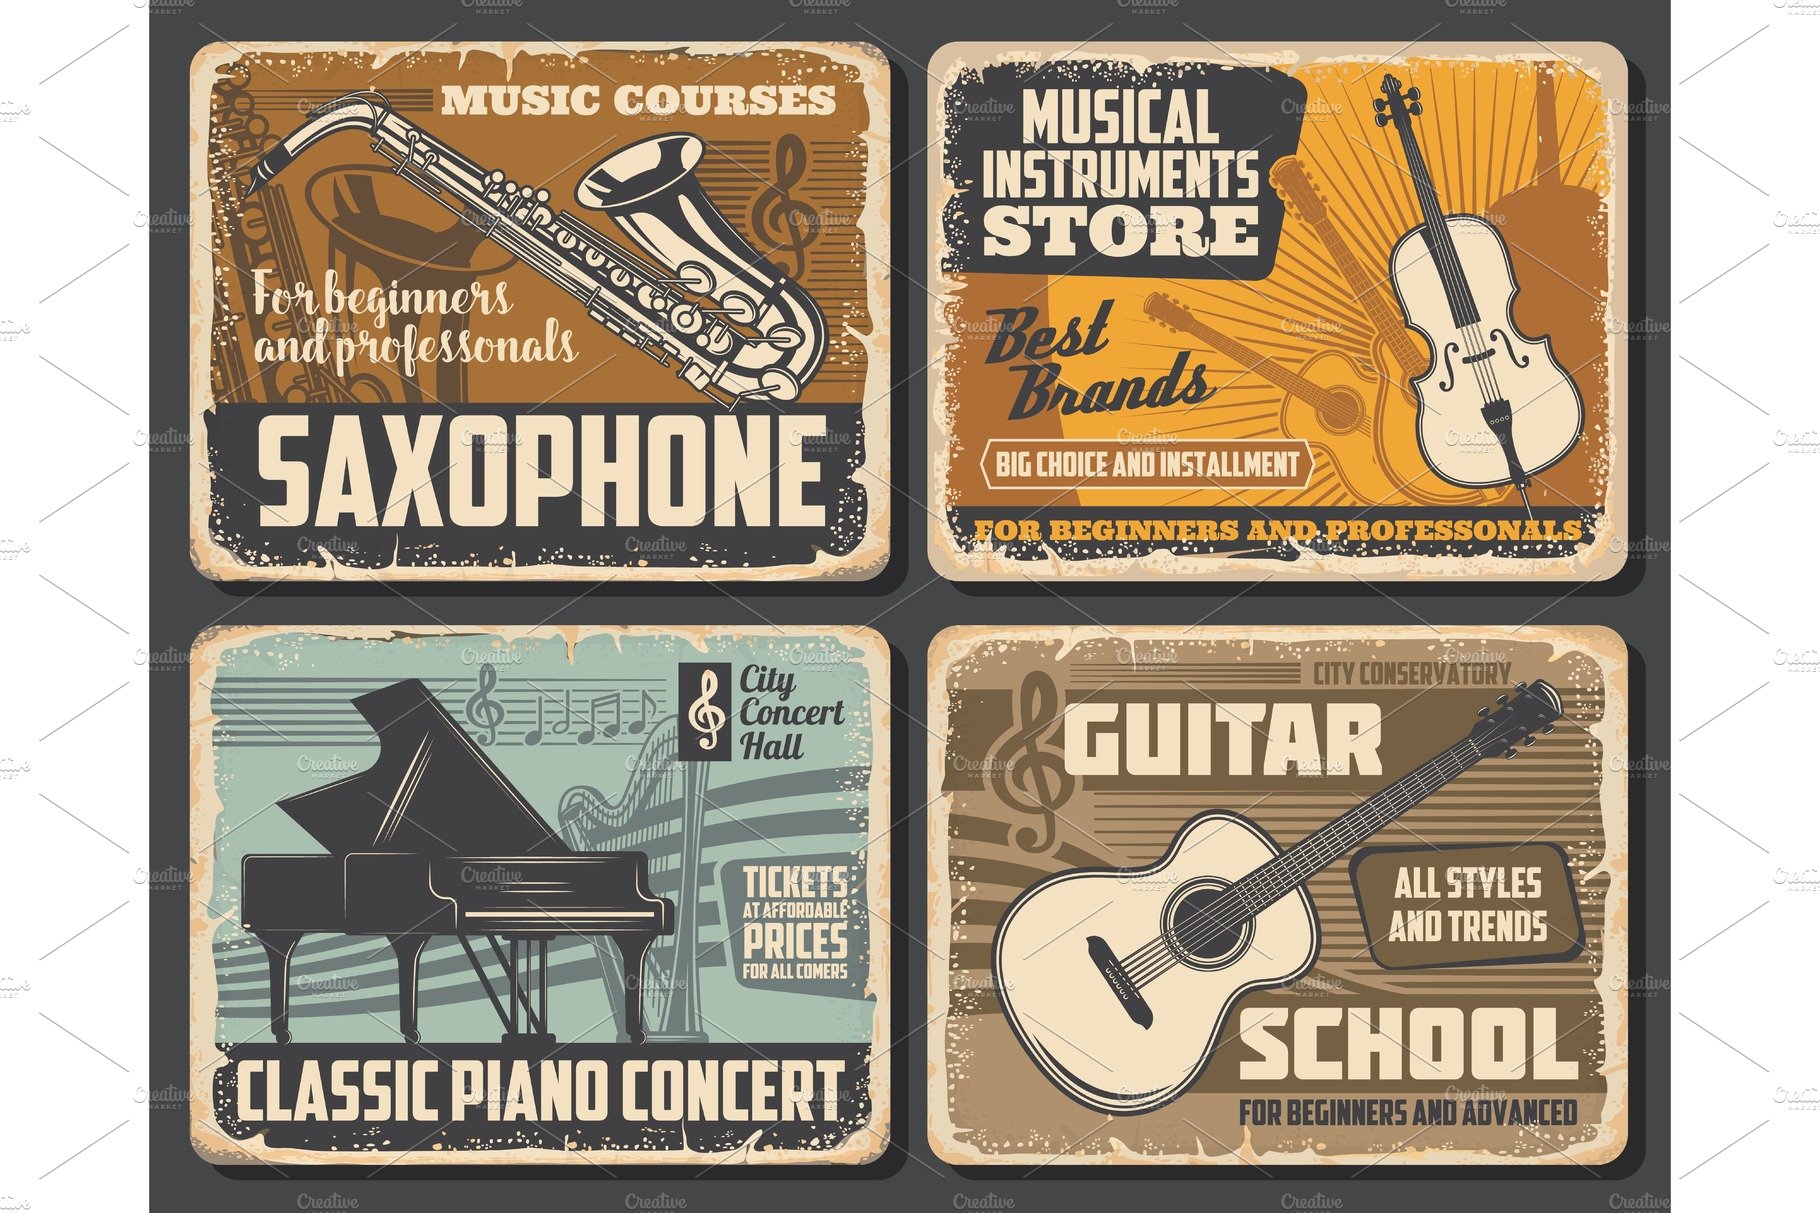 Saxophone, guitar, piano and violin cover image.